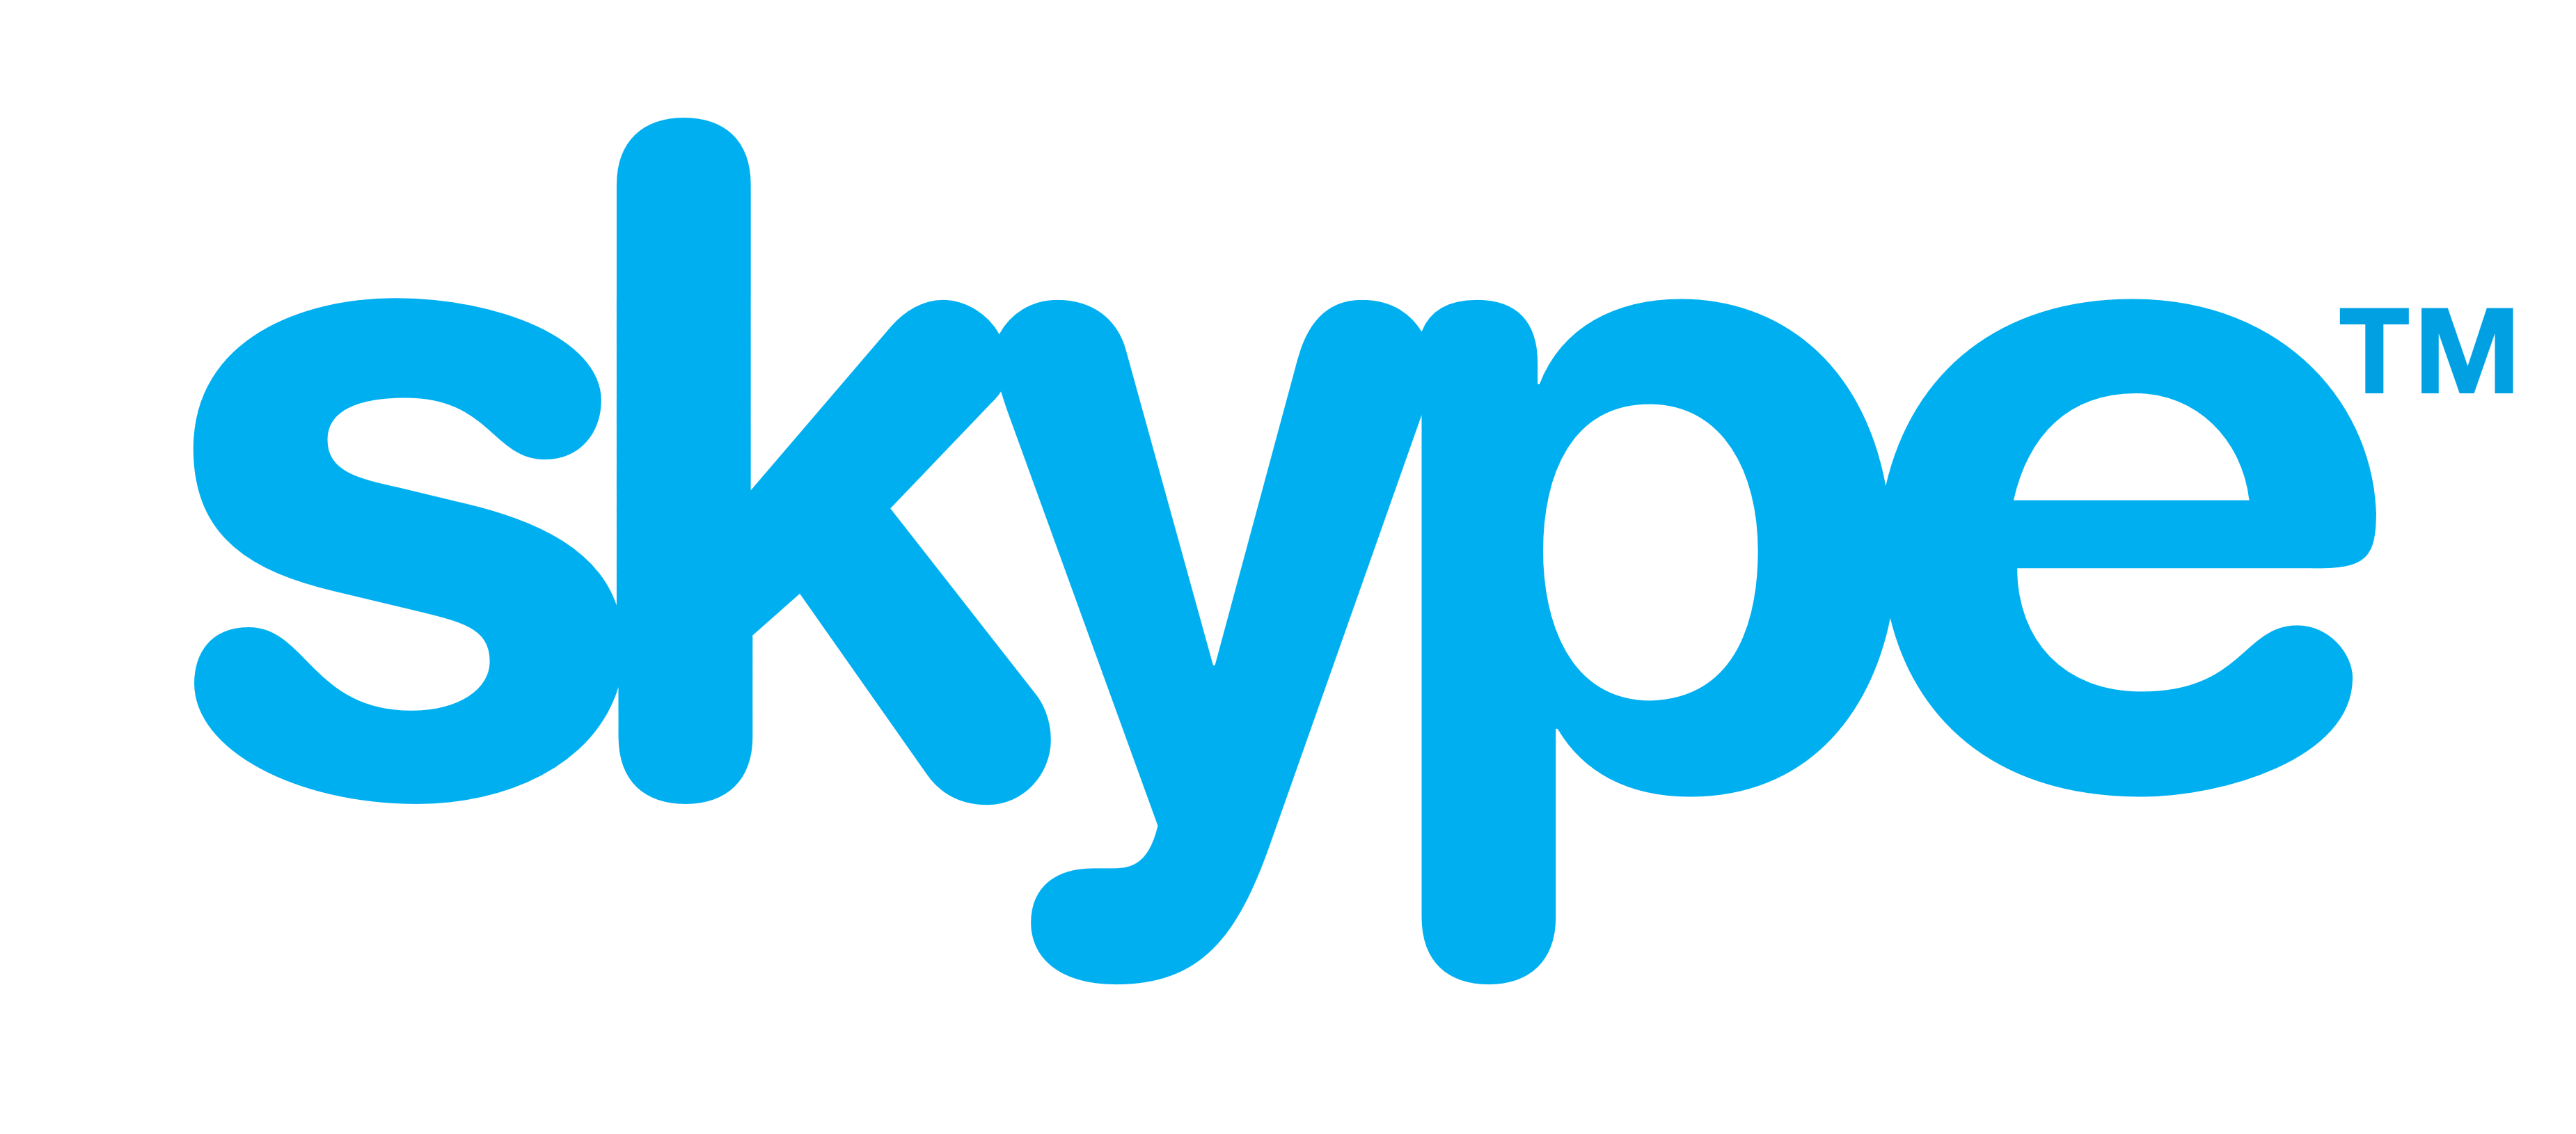 Download Skype Logo Png Vector Skype Logo Free Logo Brands Skype Pluspng.com  - Skype, Transparent background PNG HD thumbnail